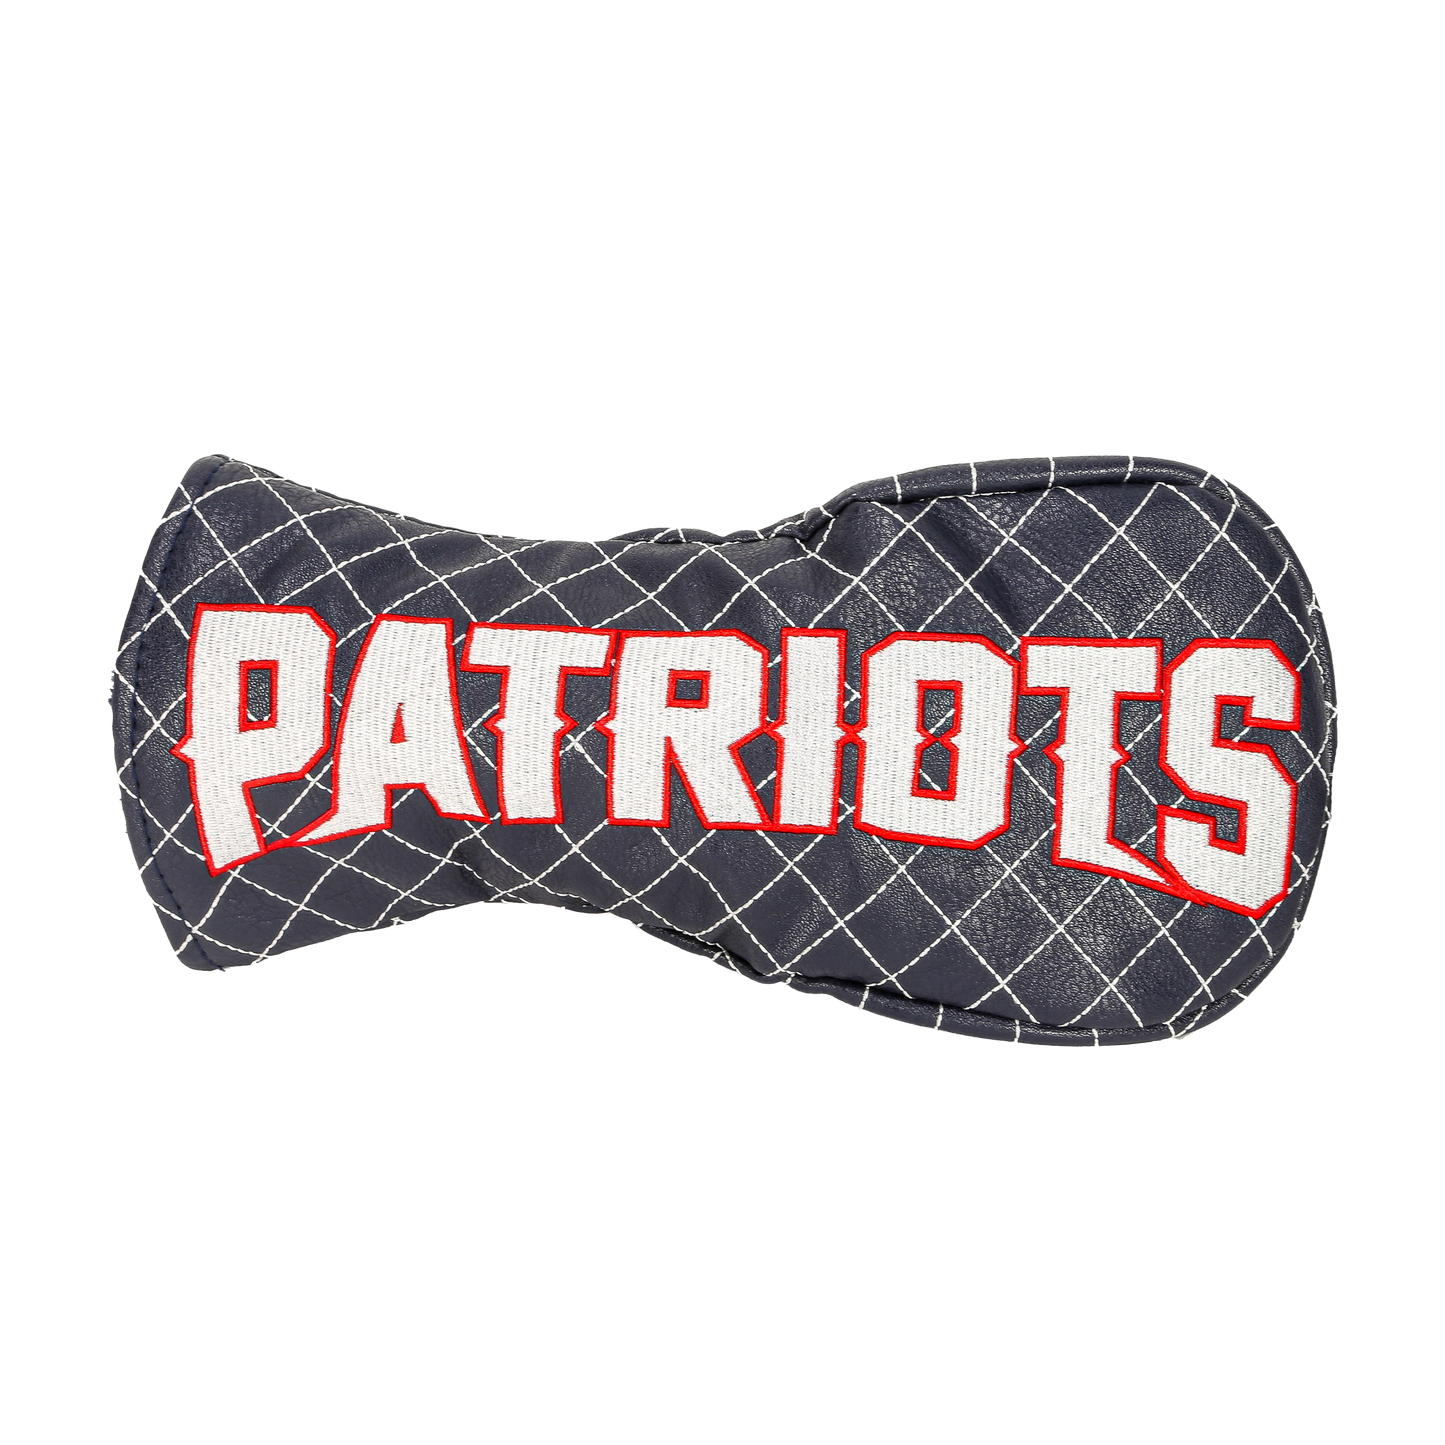 New England "Patriots" Fairway Cover